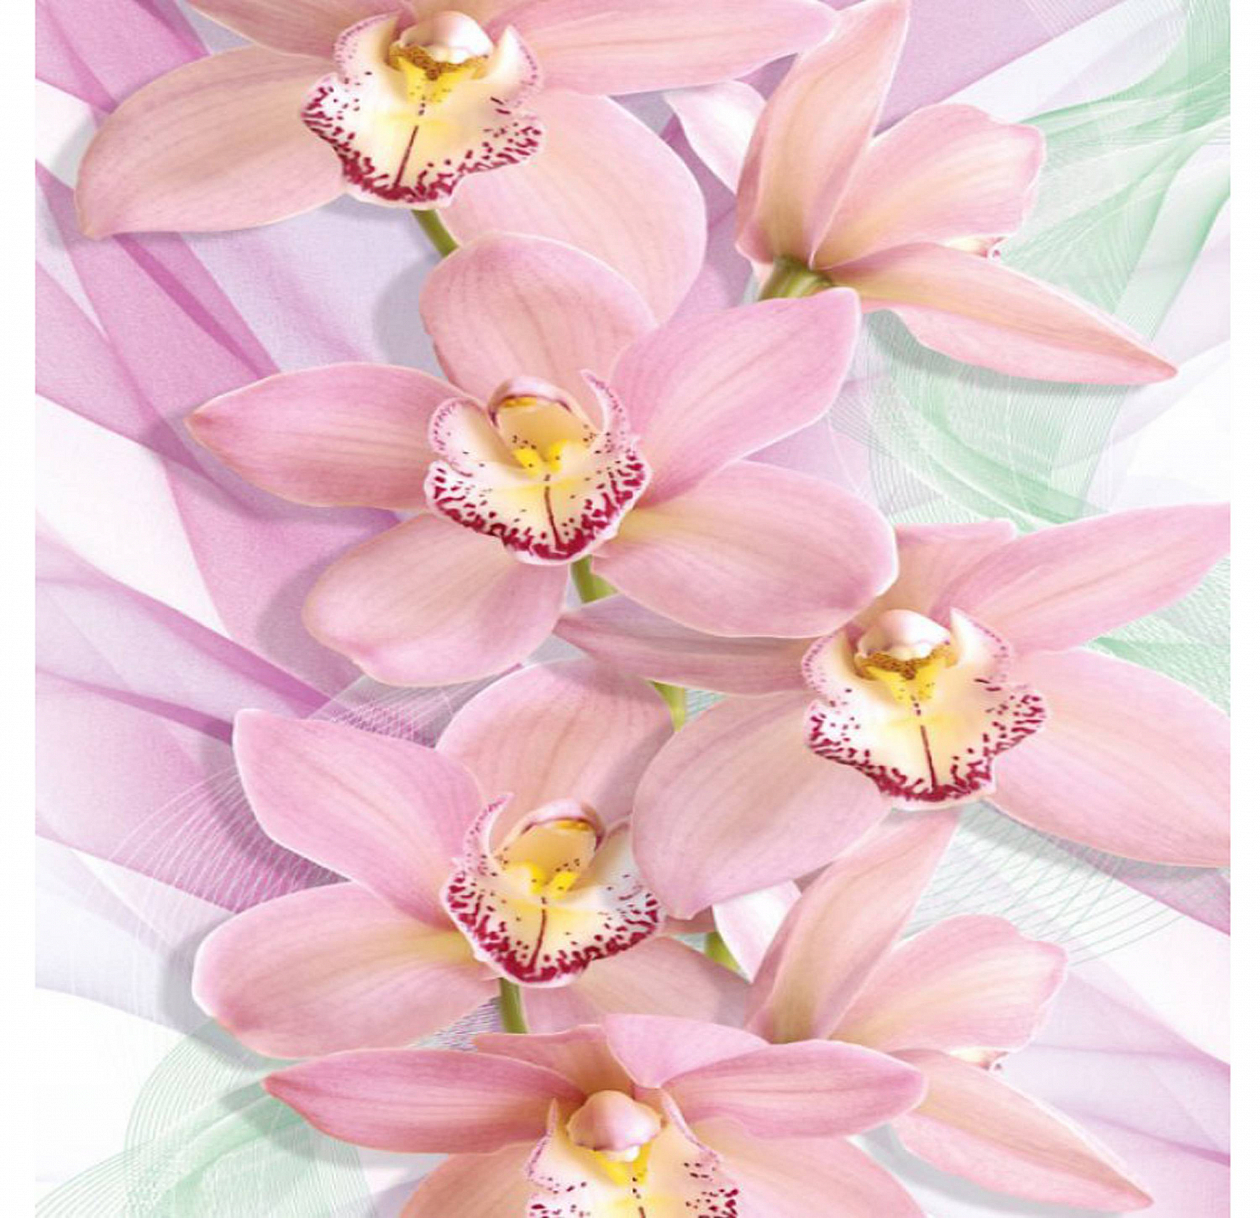 Орхидеи Фотообои Люкс (4л)